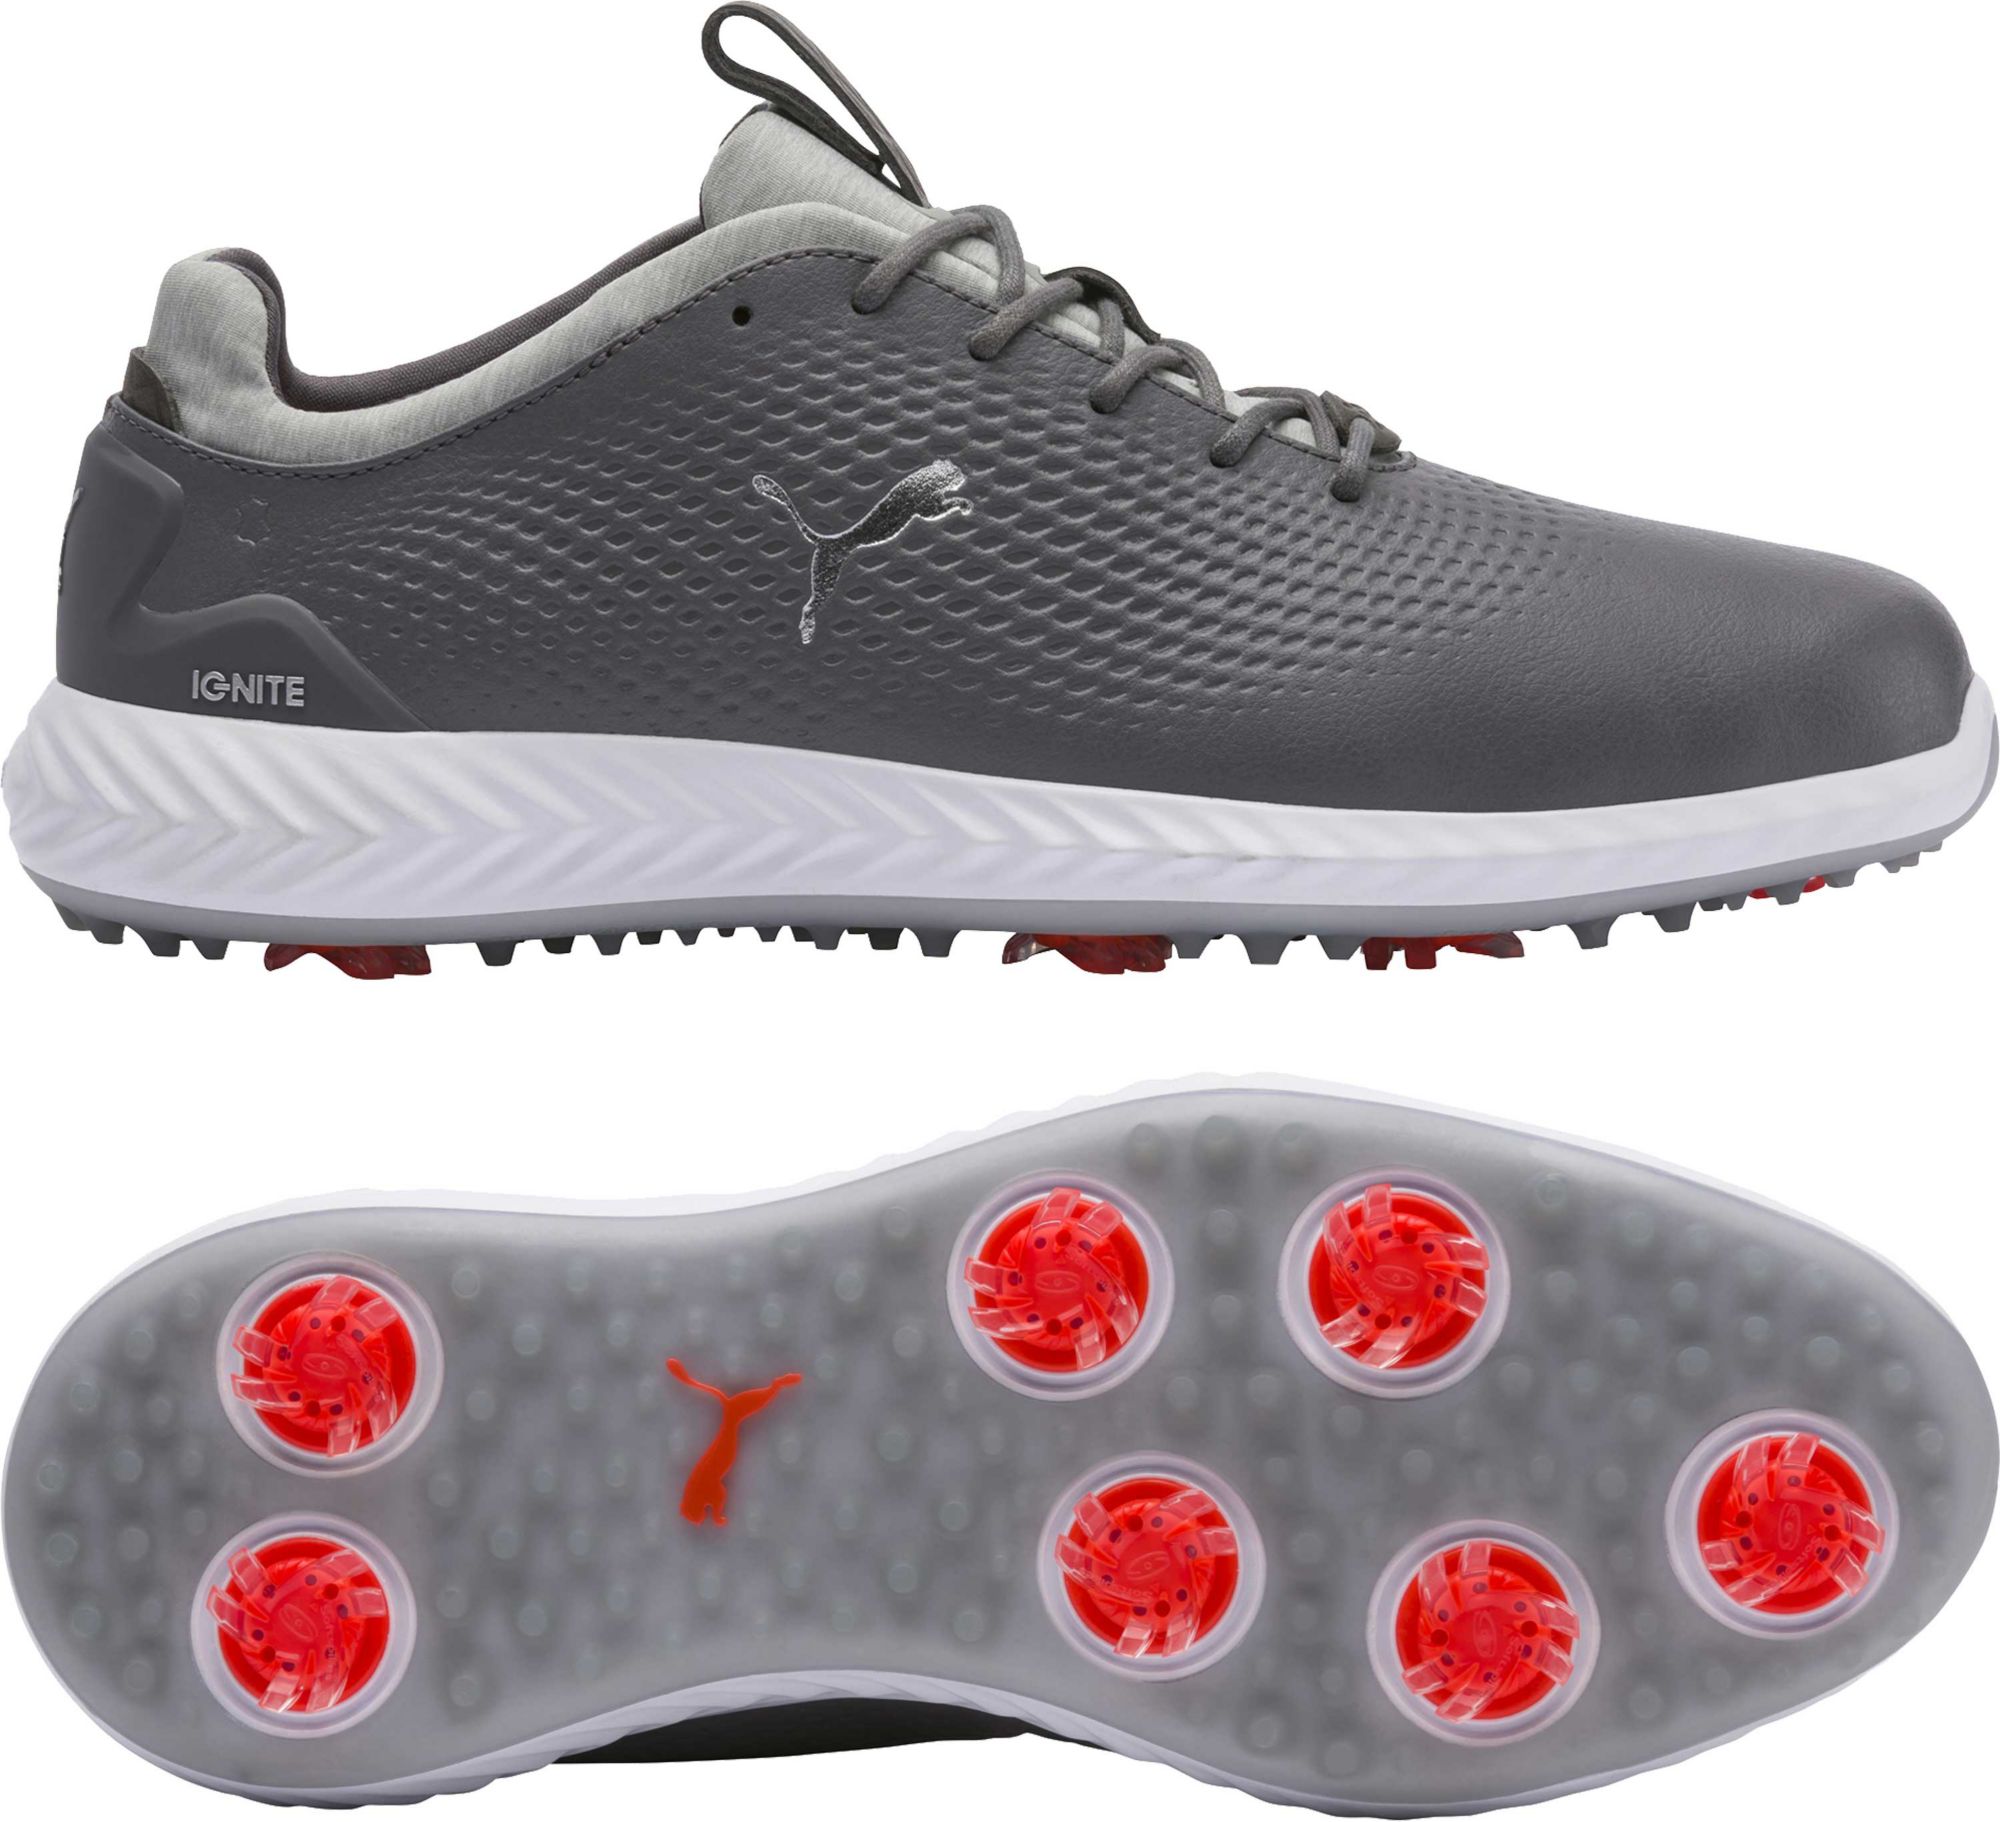 puma ignite pwradapt leather golf shoes